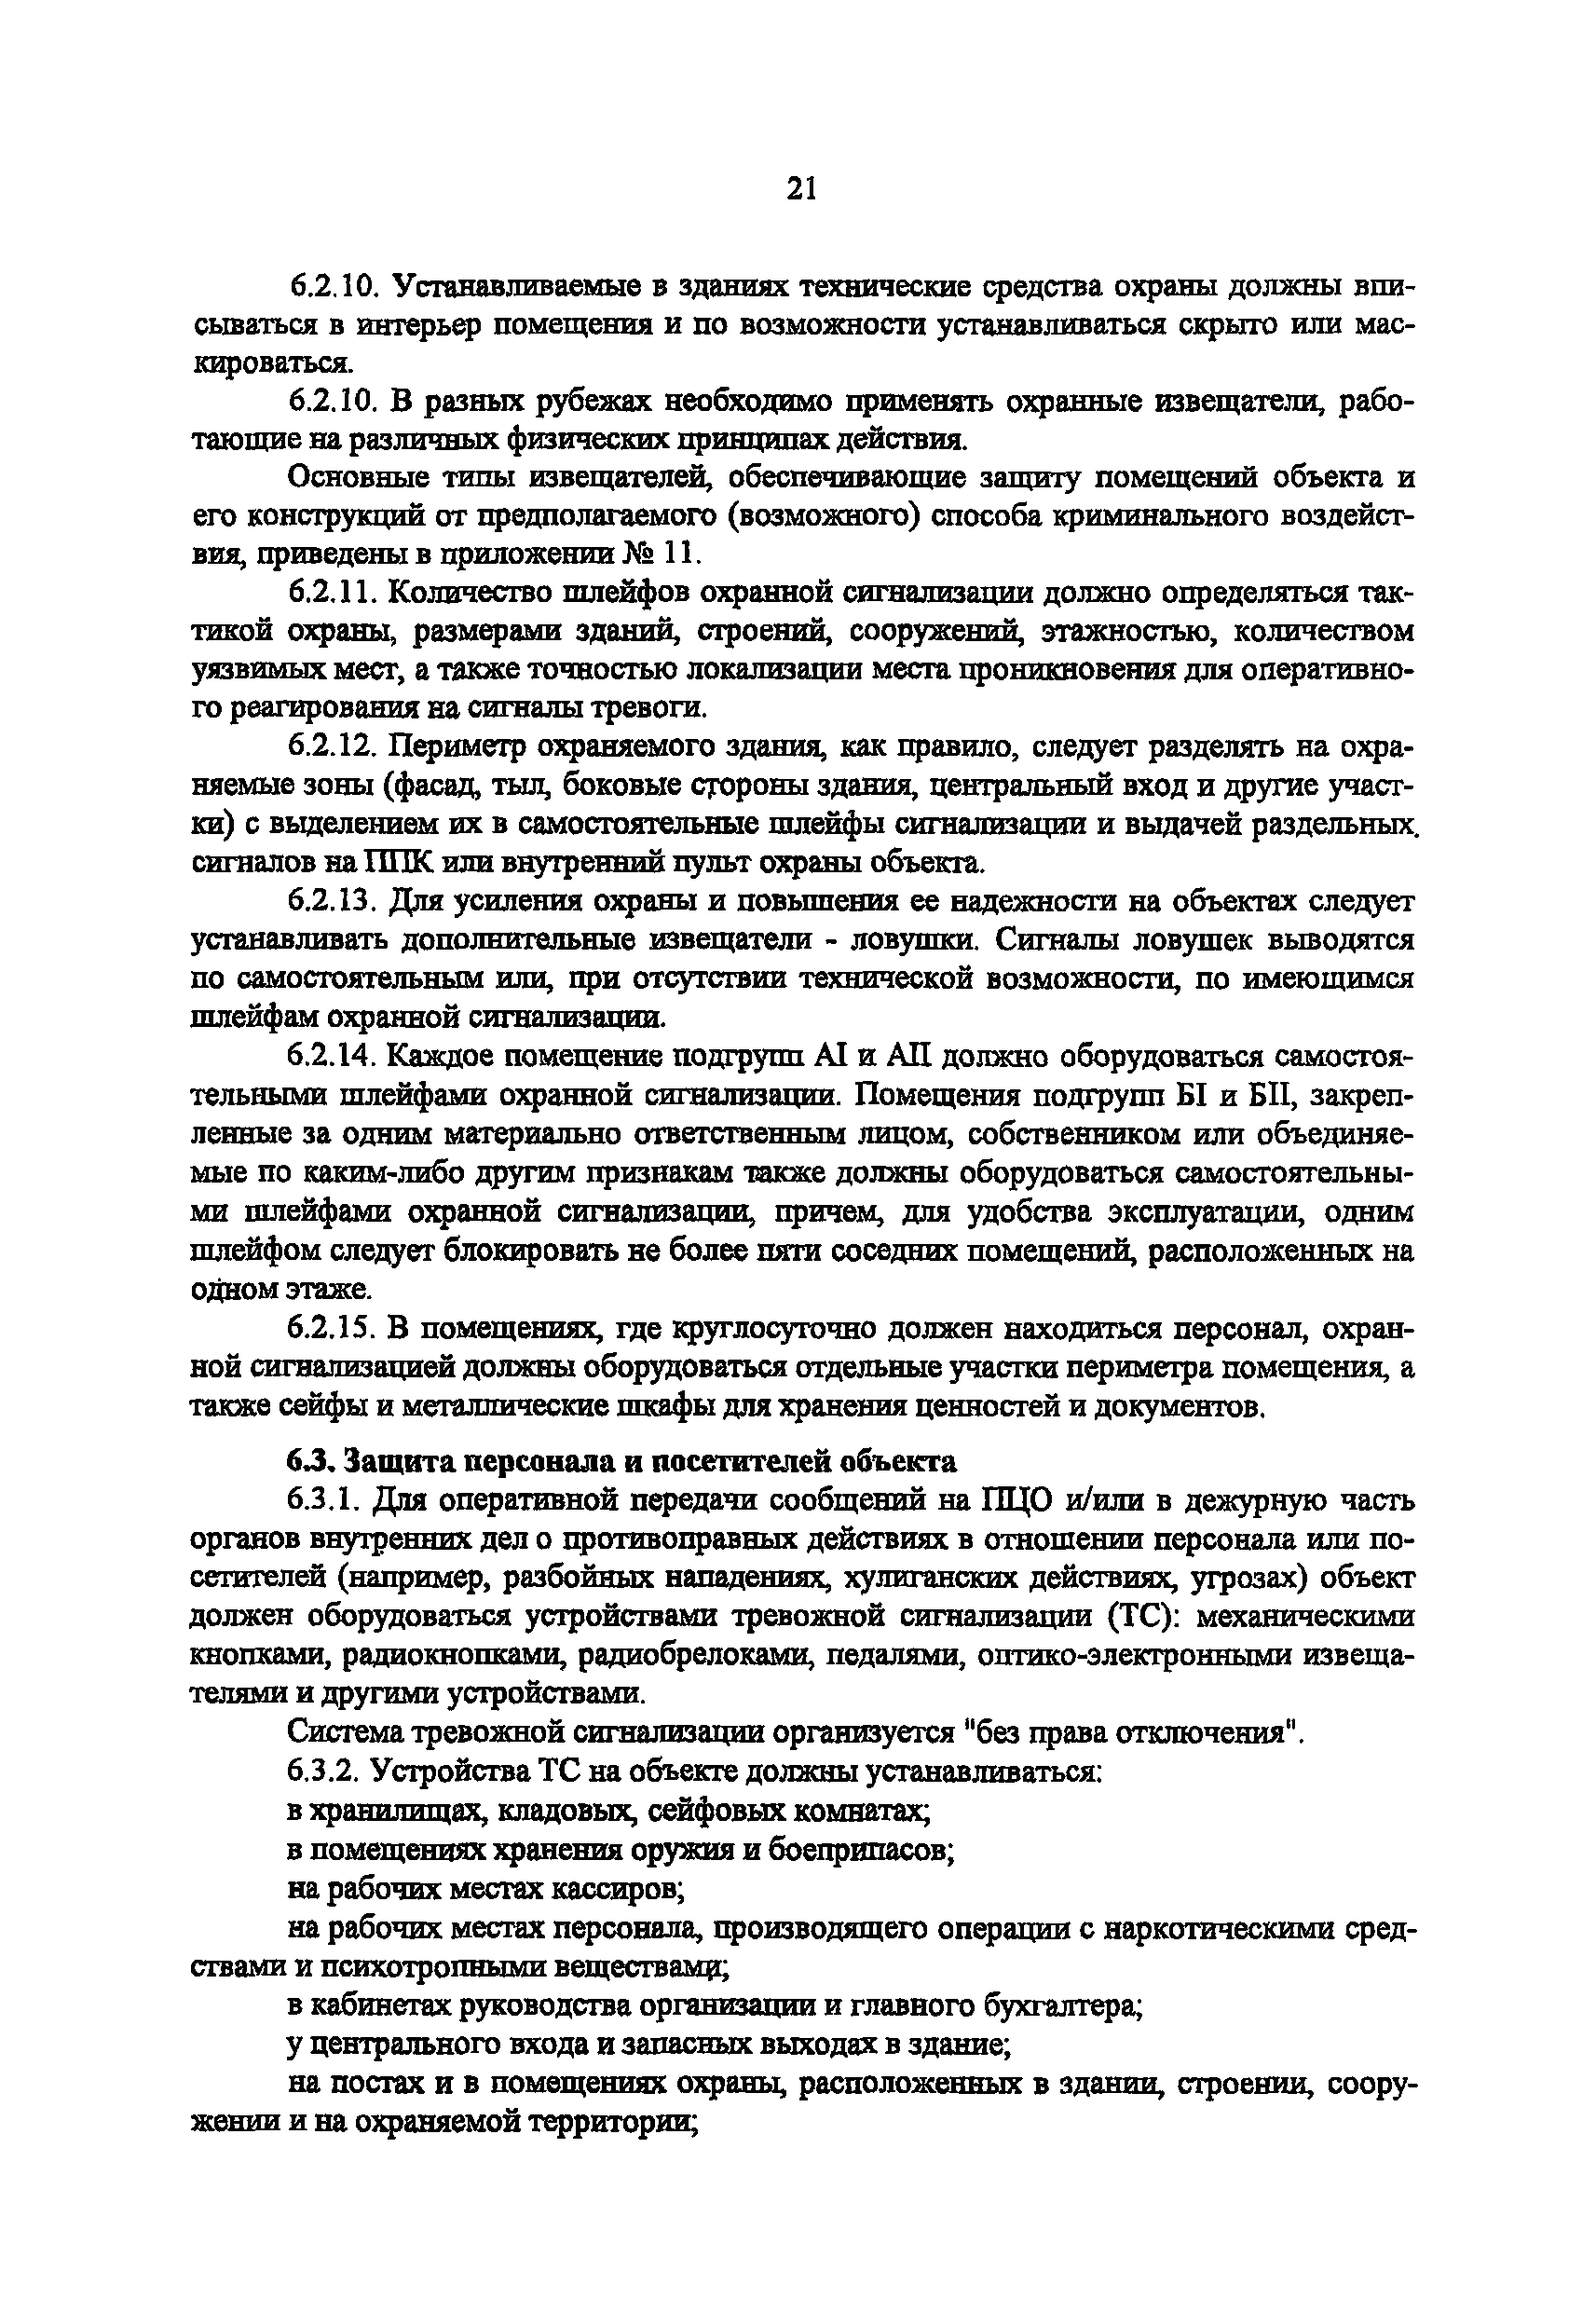 РД 78.36.003-2002/МВД России